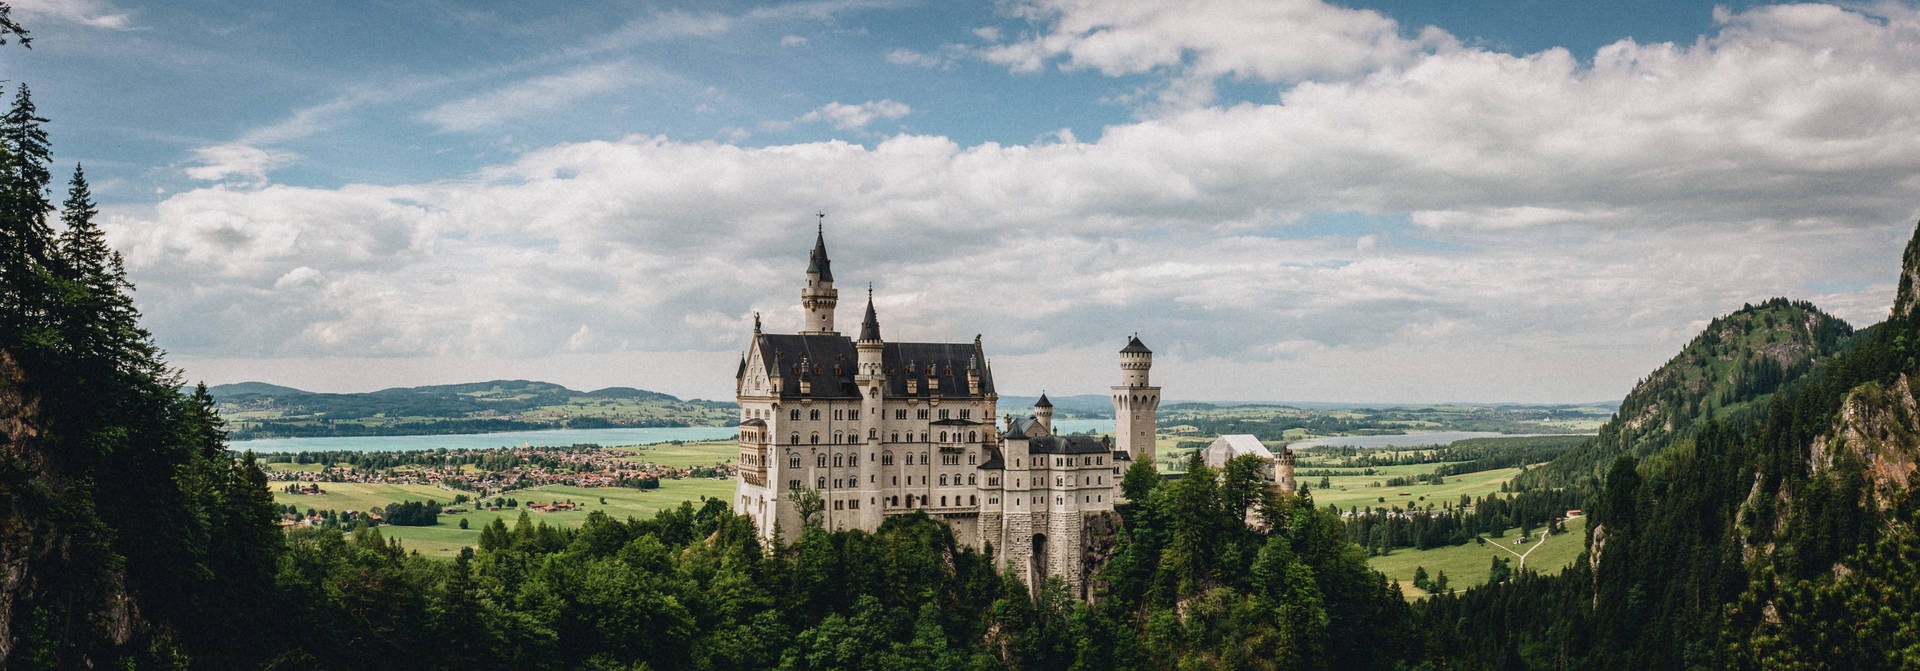 Castle Neuschwanstein Germany Widescreen